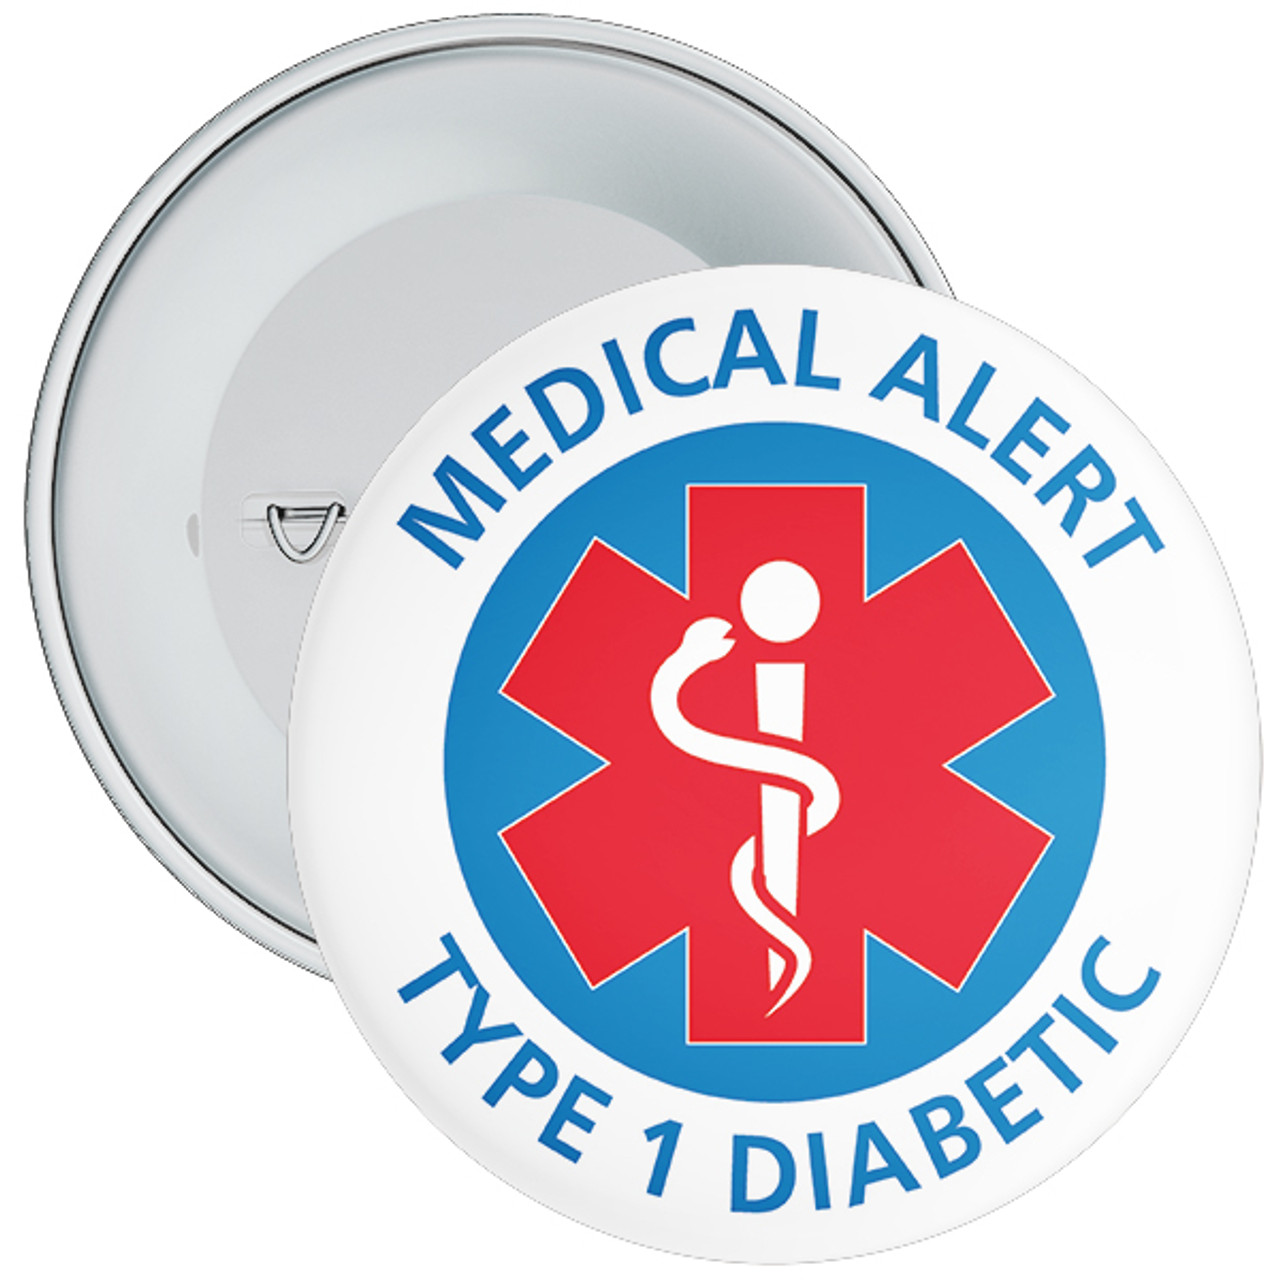 Type 1 Diabetes Medical Alert Badge - 5 Sizes - The Badge Centre ®